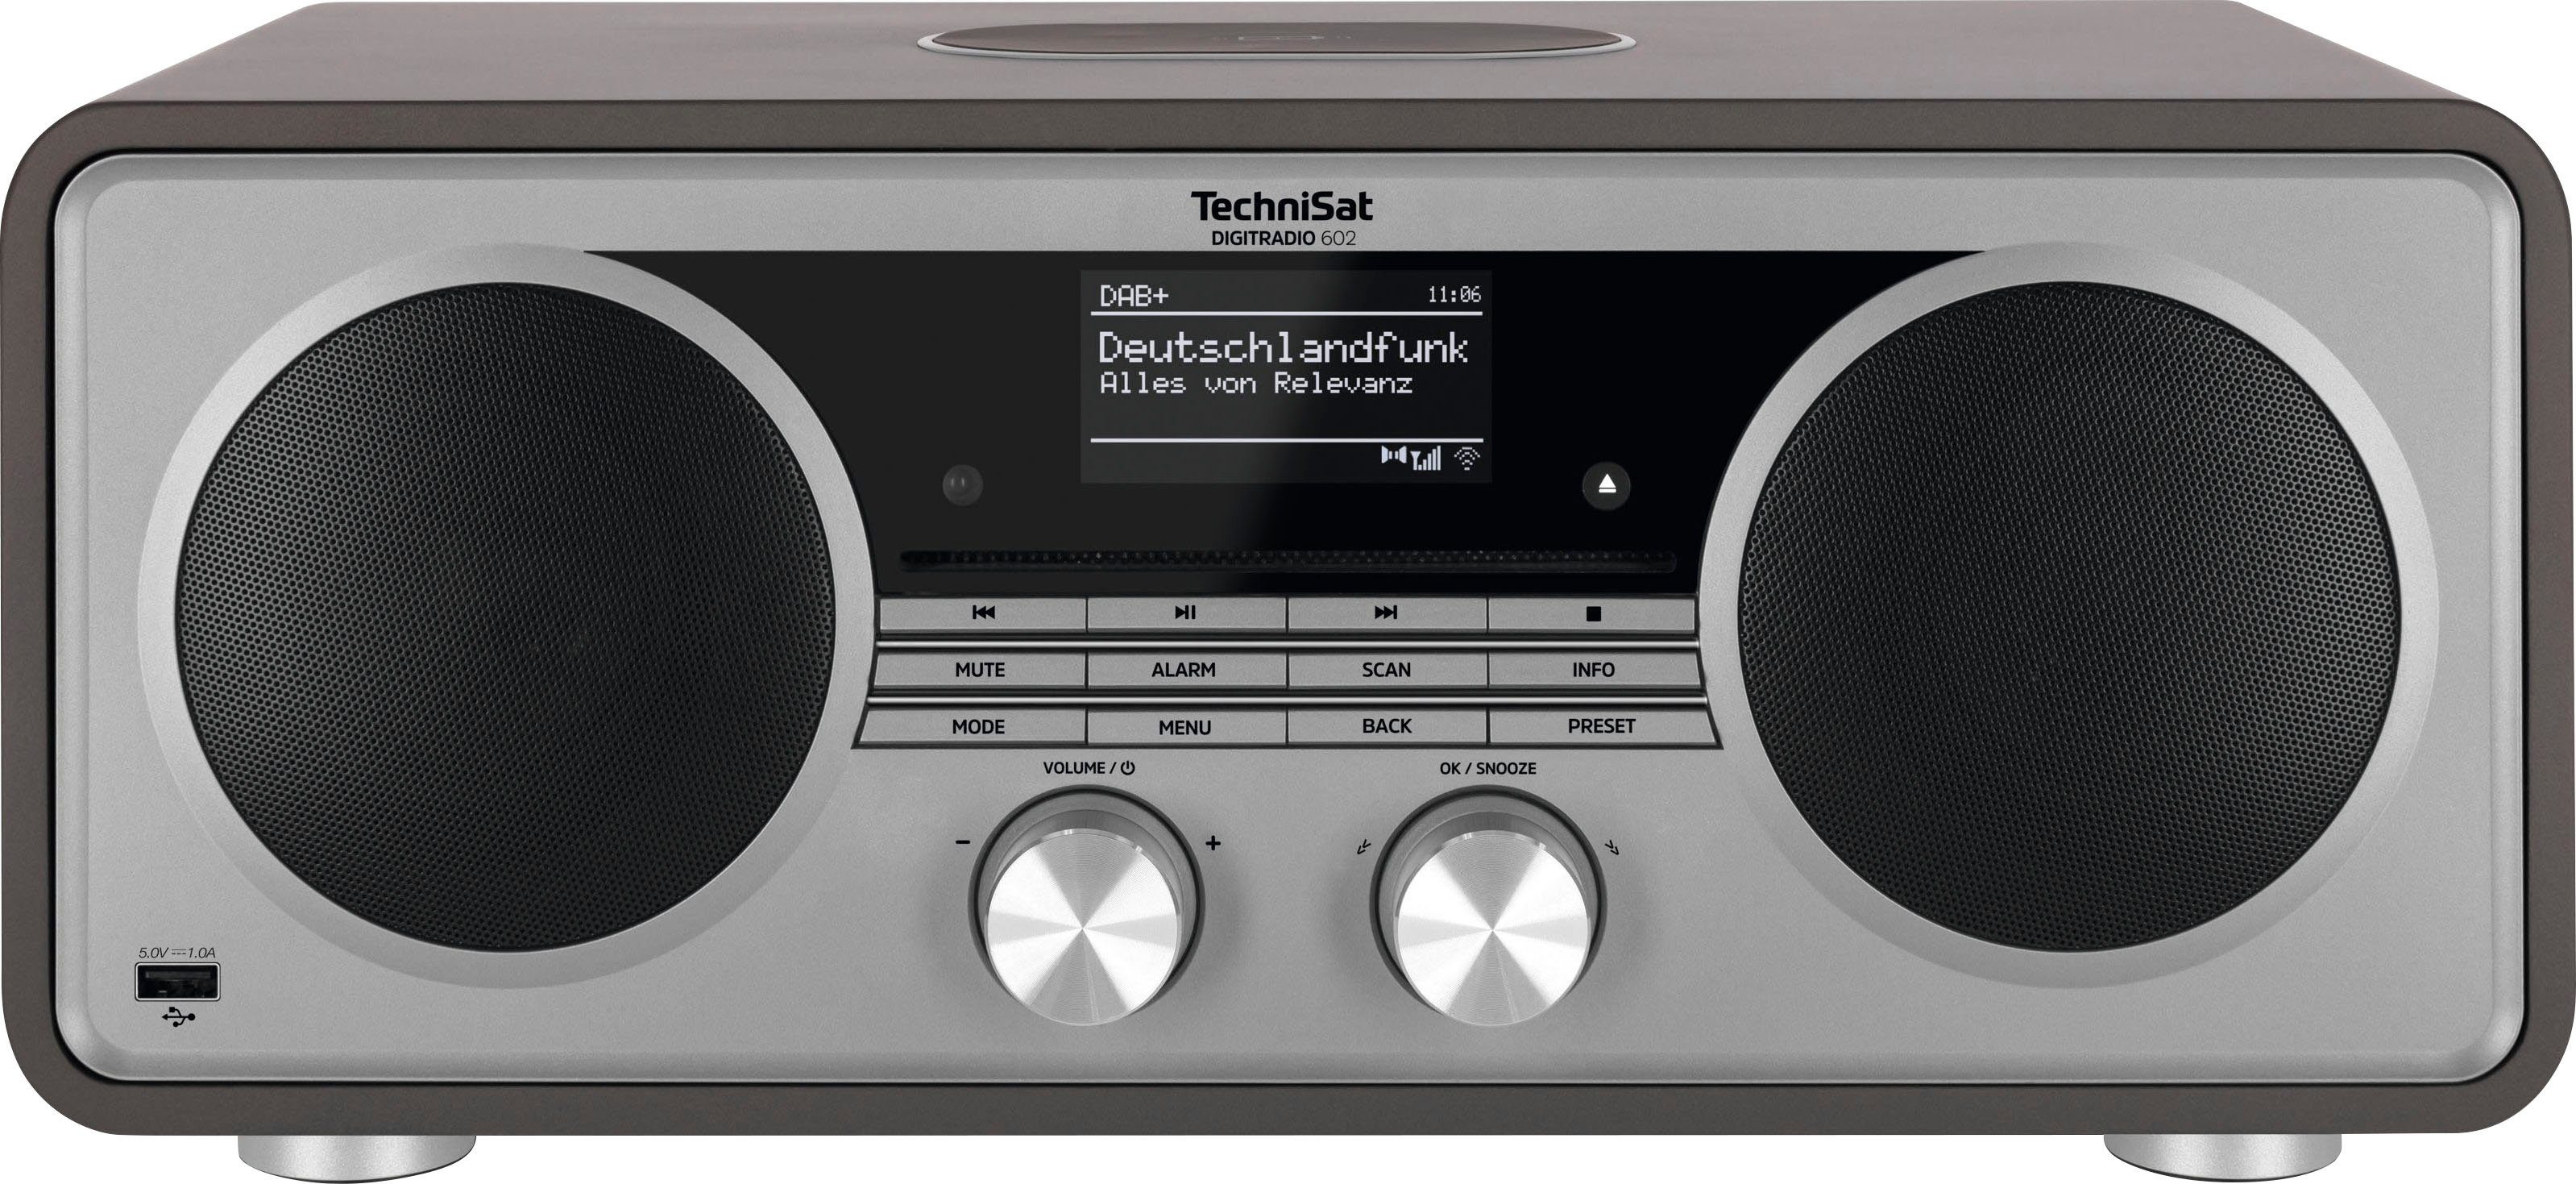 W, 70 Anthrazit/Silber TechniSat Stereoanlage, (DAB), Internet-Radio CD-Player) (Digitalradio 602 mit DIGITRADIO RDS, UKW